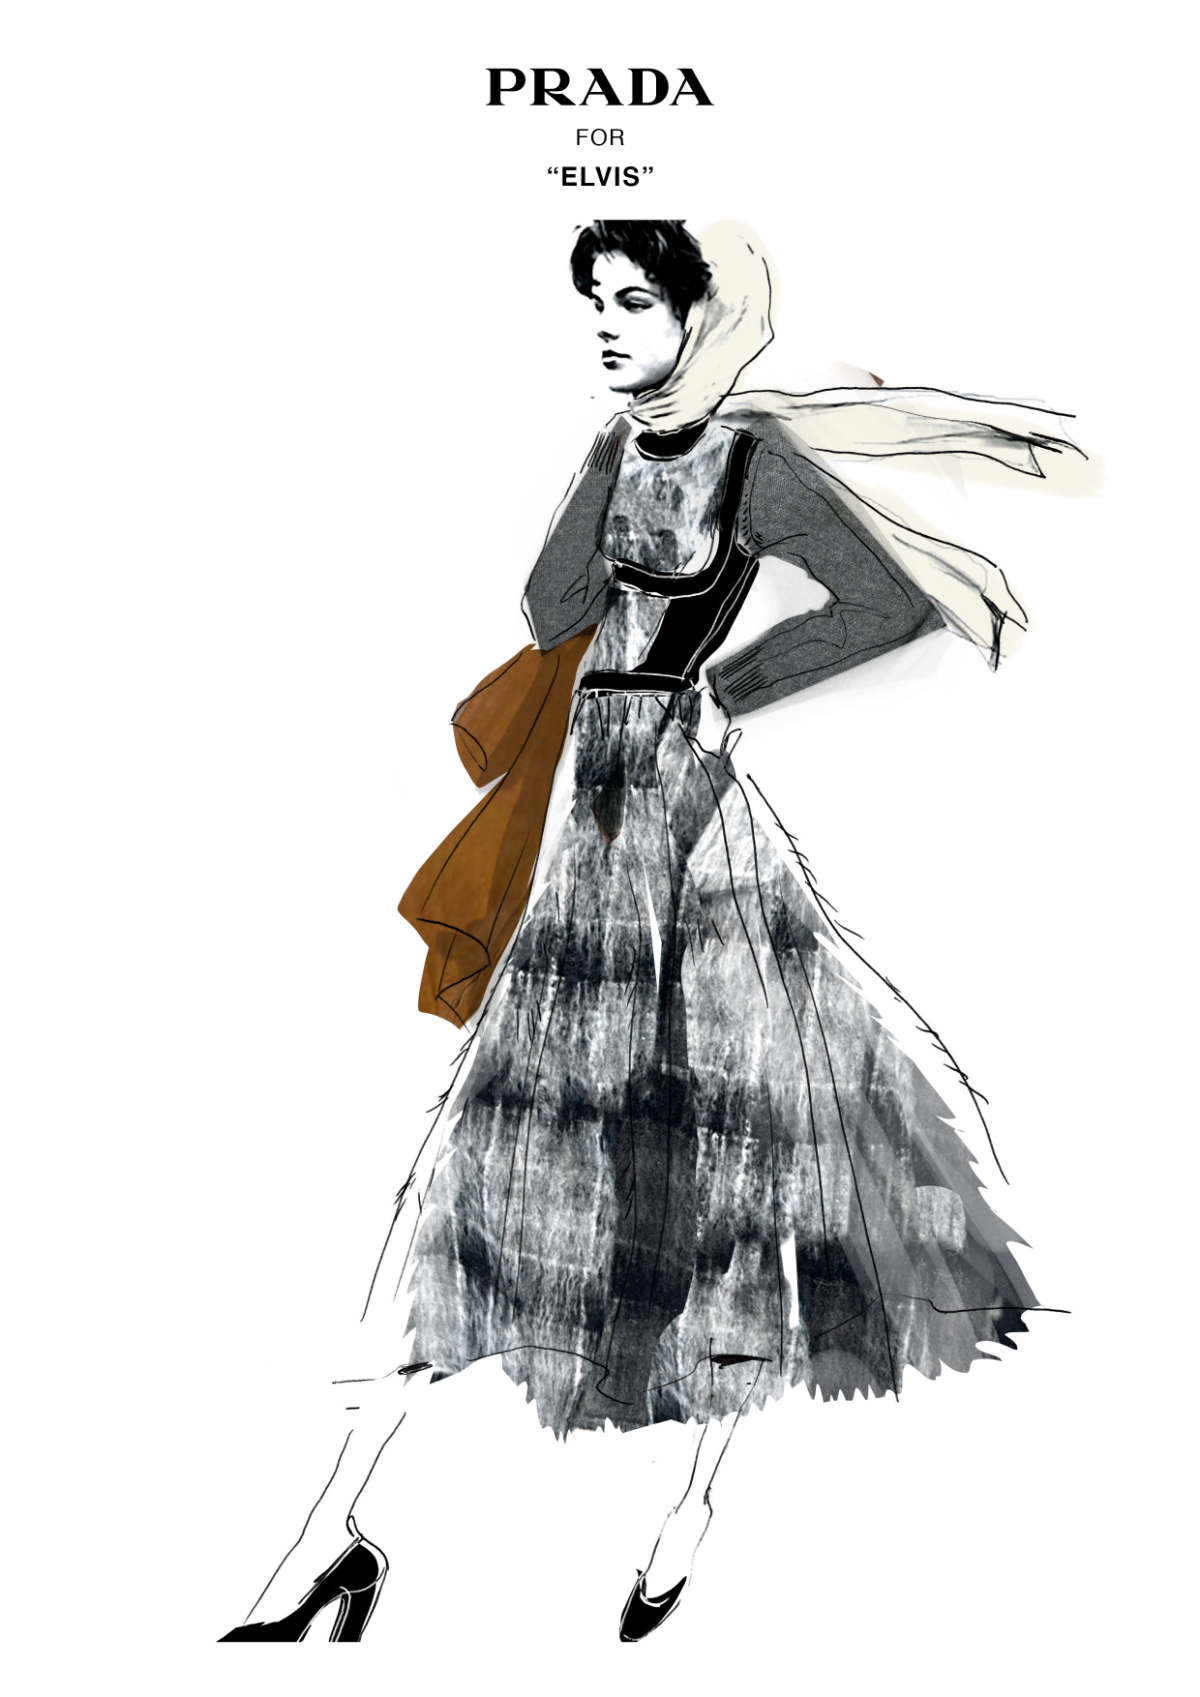 Prada And Miu Miu Announced The Collaboration Of Miuccia Prada On Costumes For 